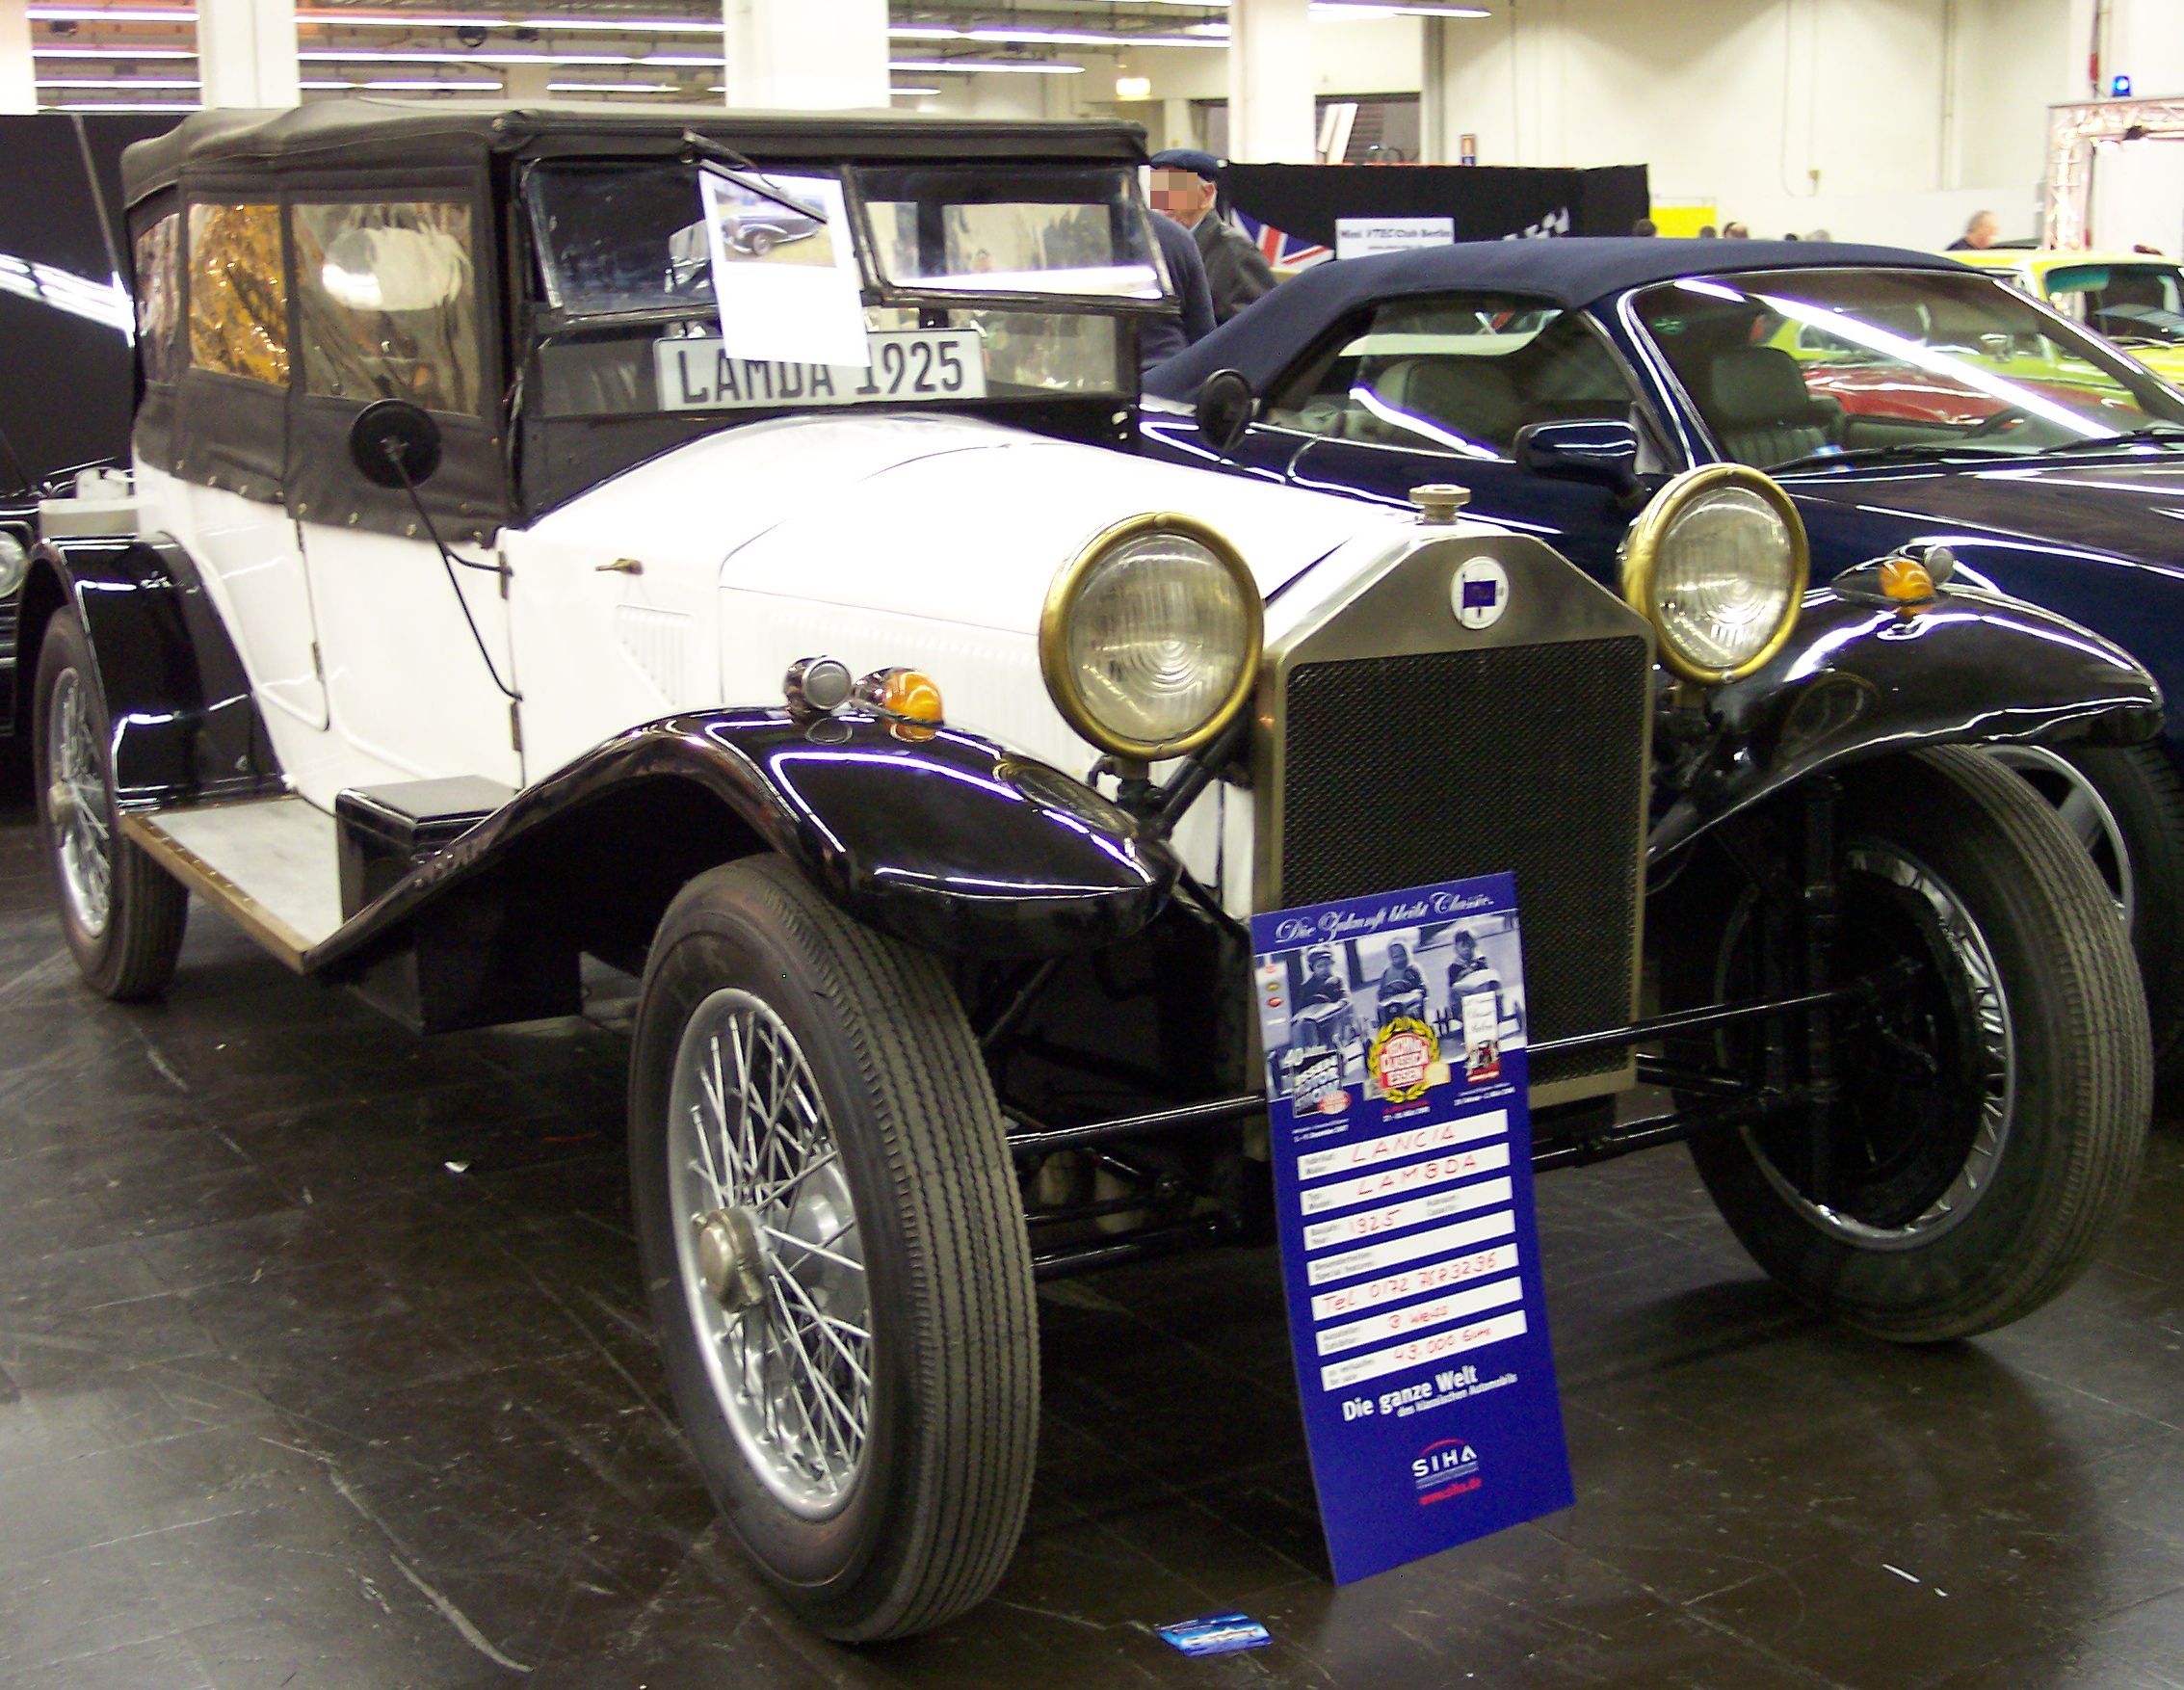  Lancia Lambda (1925) 